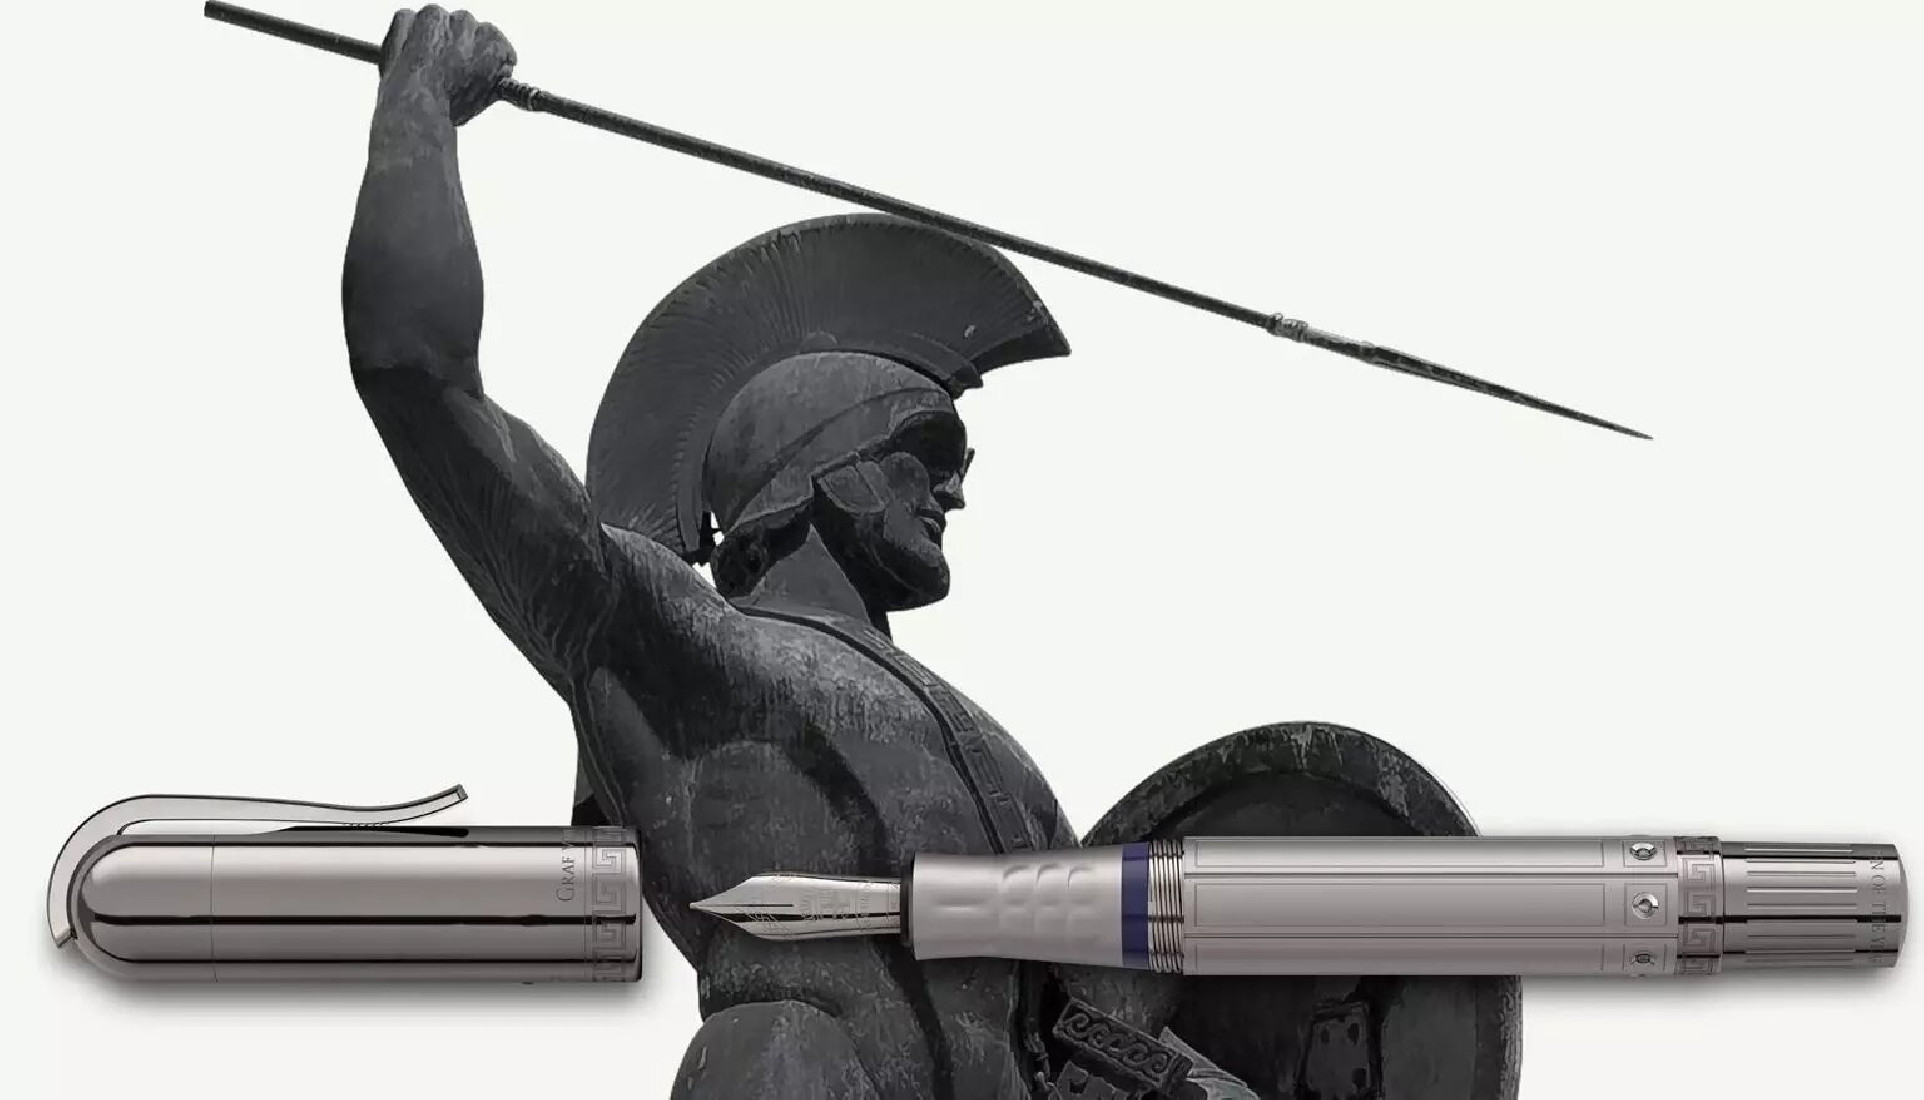 Graf Von Faber Castell Fountain pen Pen of the Year 2020 Ruthenium Sparta